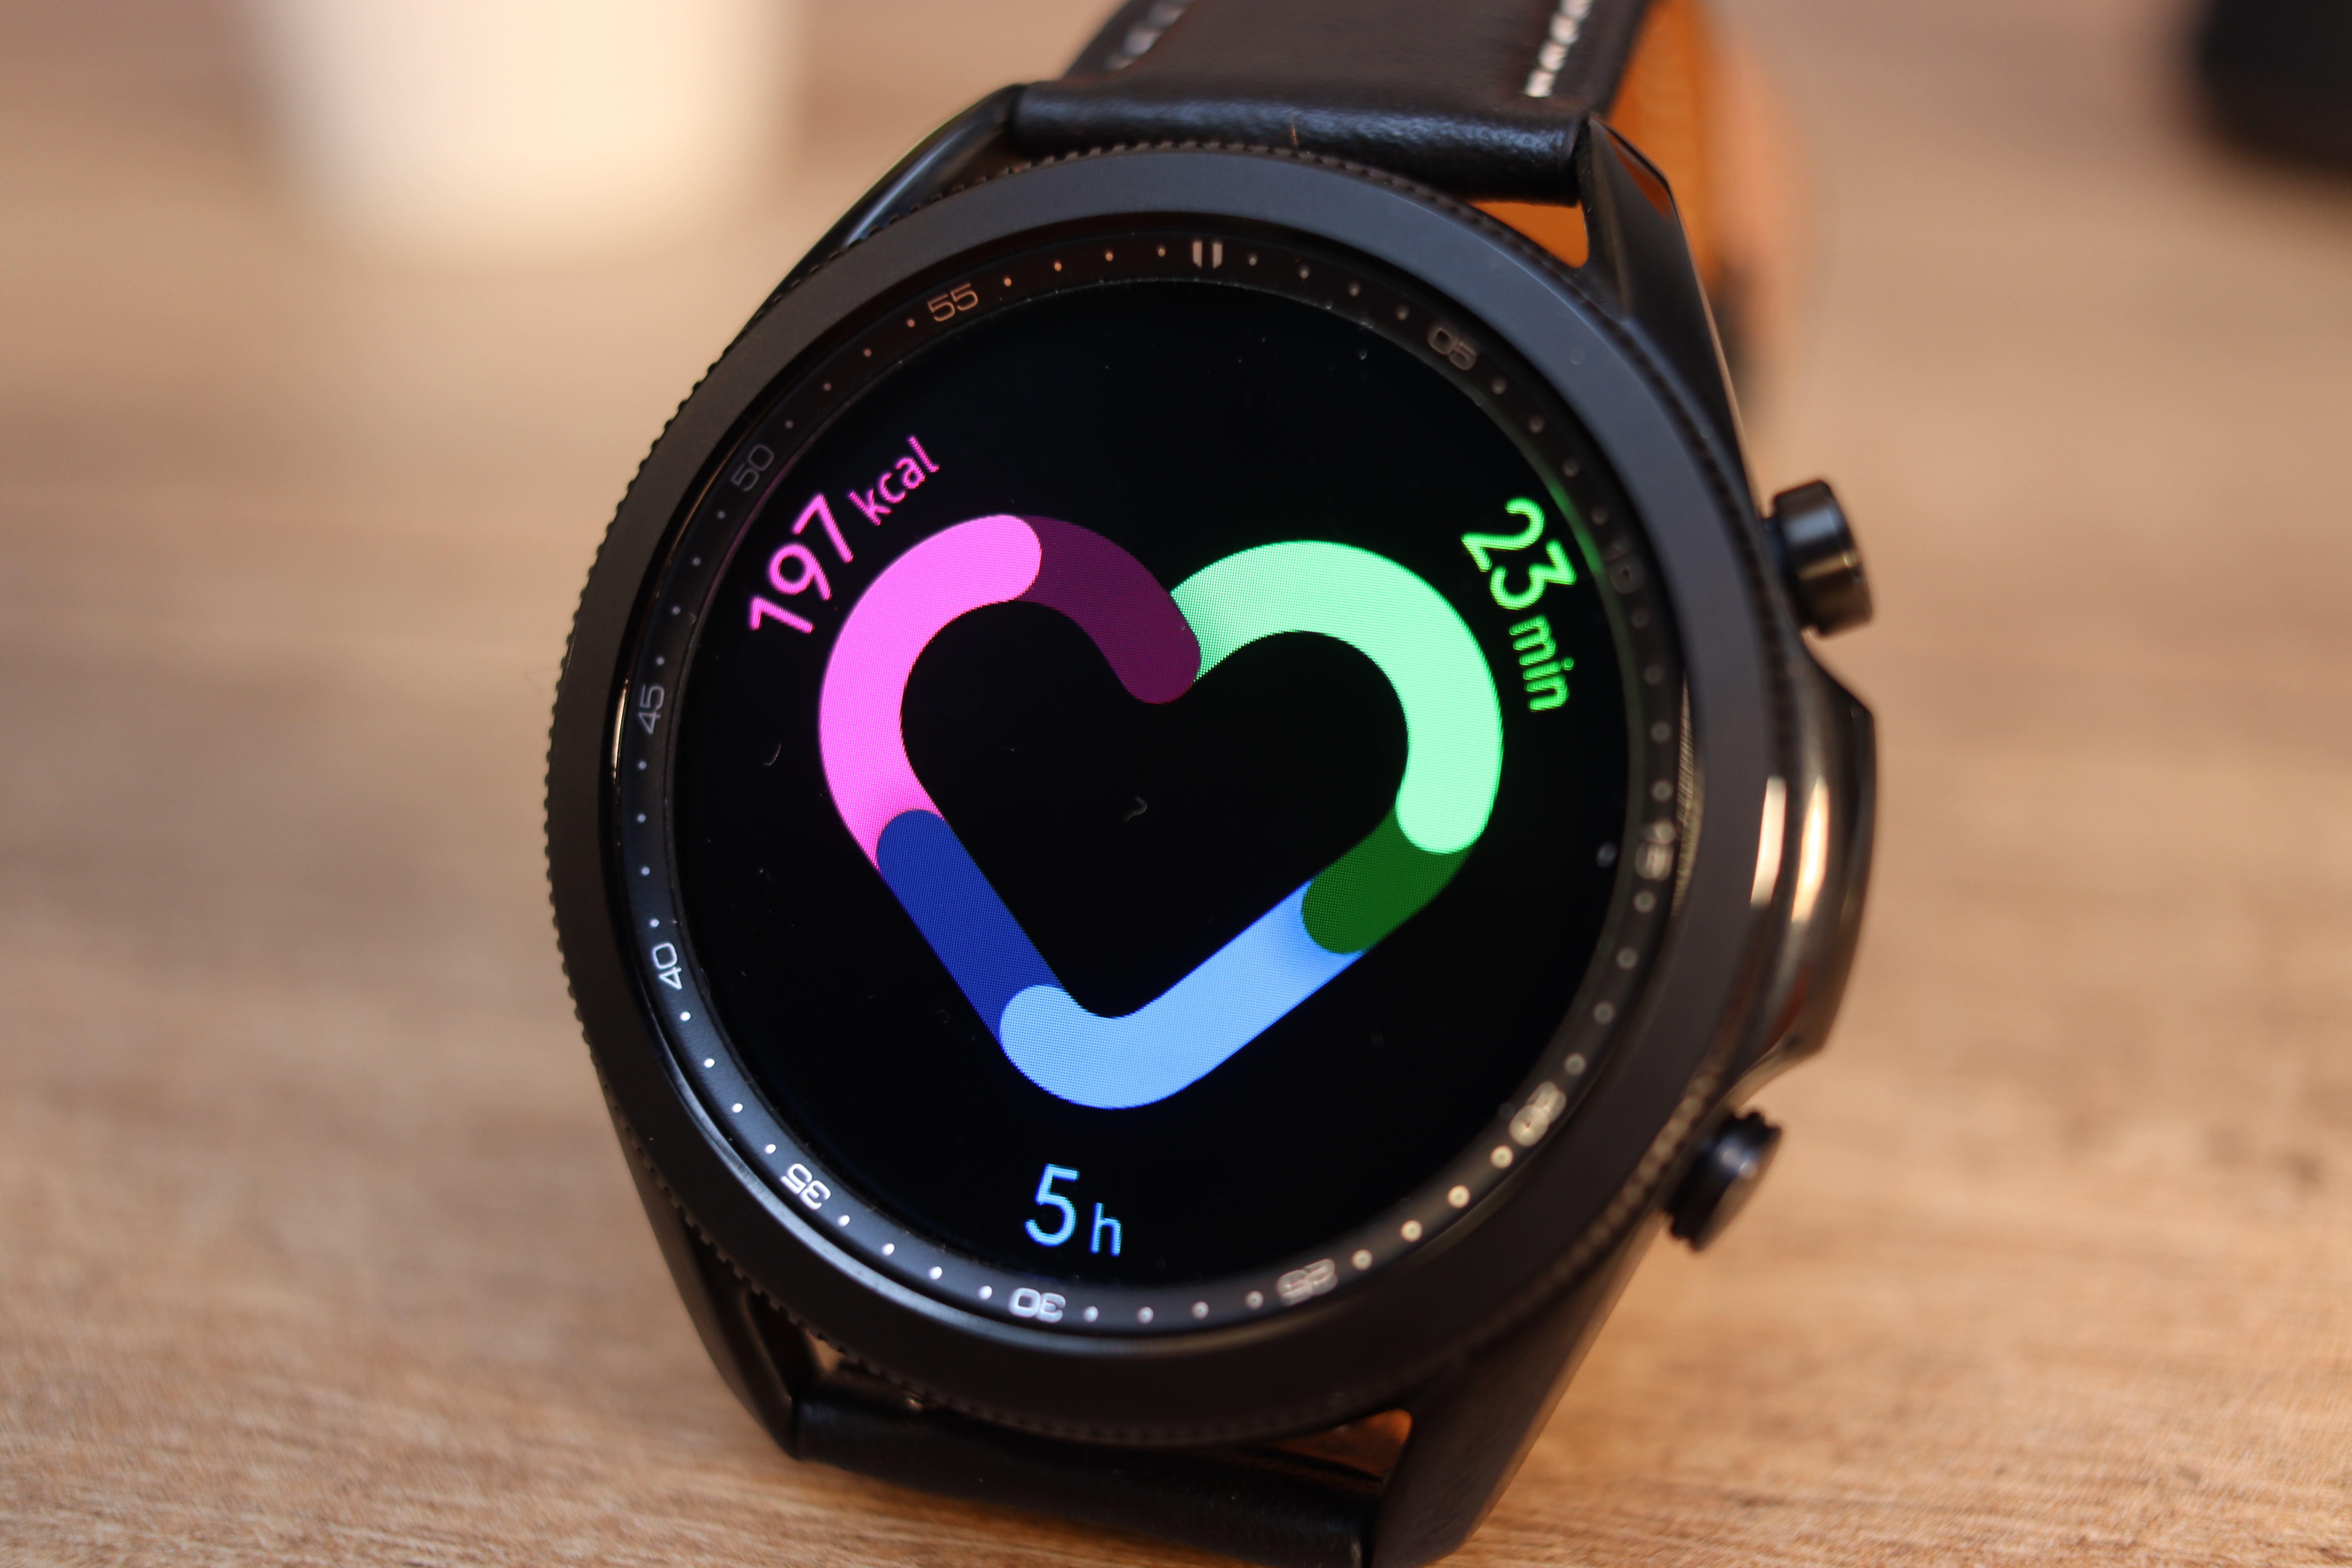 Часы Samsung Galaxy watch 2 линия питания. Смарт часы Samsung Galaxy watch c ,tptktv. Смарт-часы Samsung Galaxy watch 5 JN отзывы. Часы samsung watch отзывы